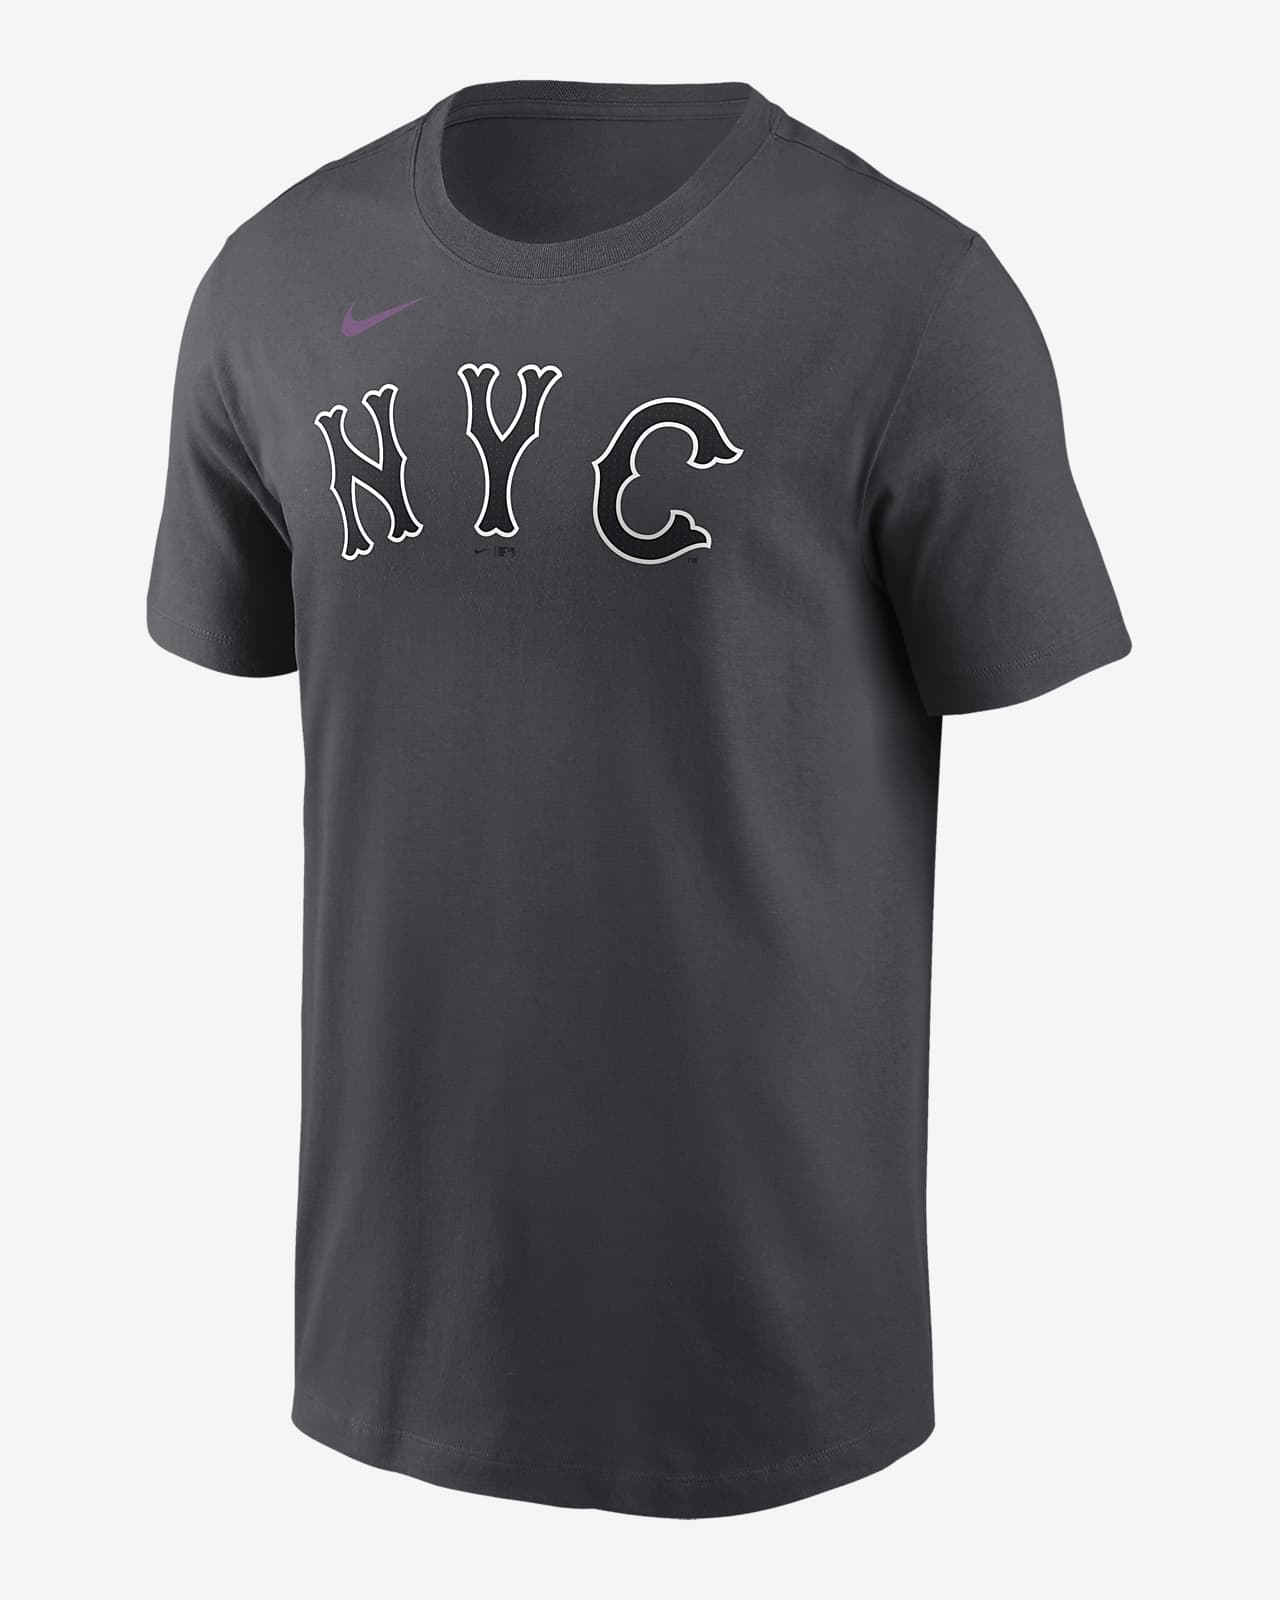 Playera Nike de la MLB para hombre Pete Alonso New York Mets City Connect Fuse